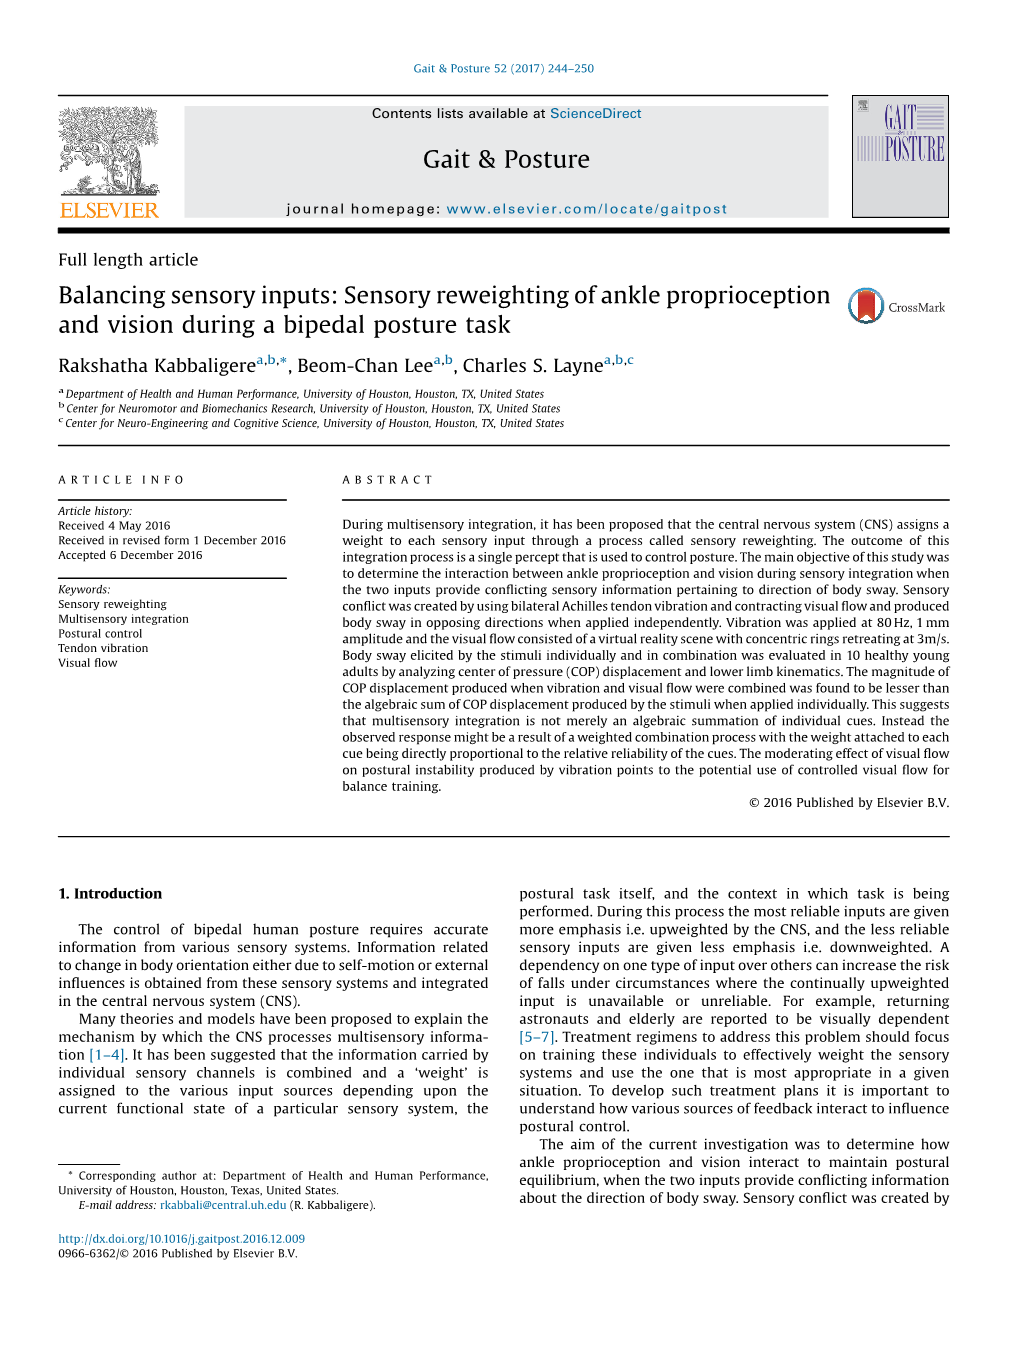 Balancing Sensory Inputs: Sensory Reweighting of Ankle Proprioception